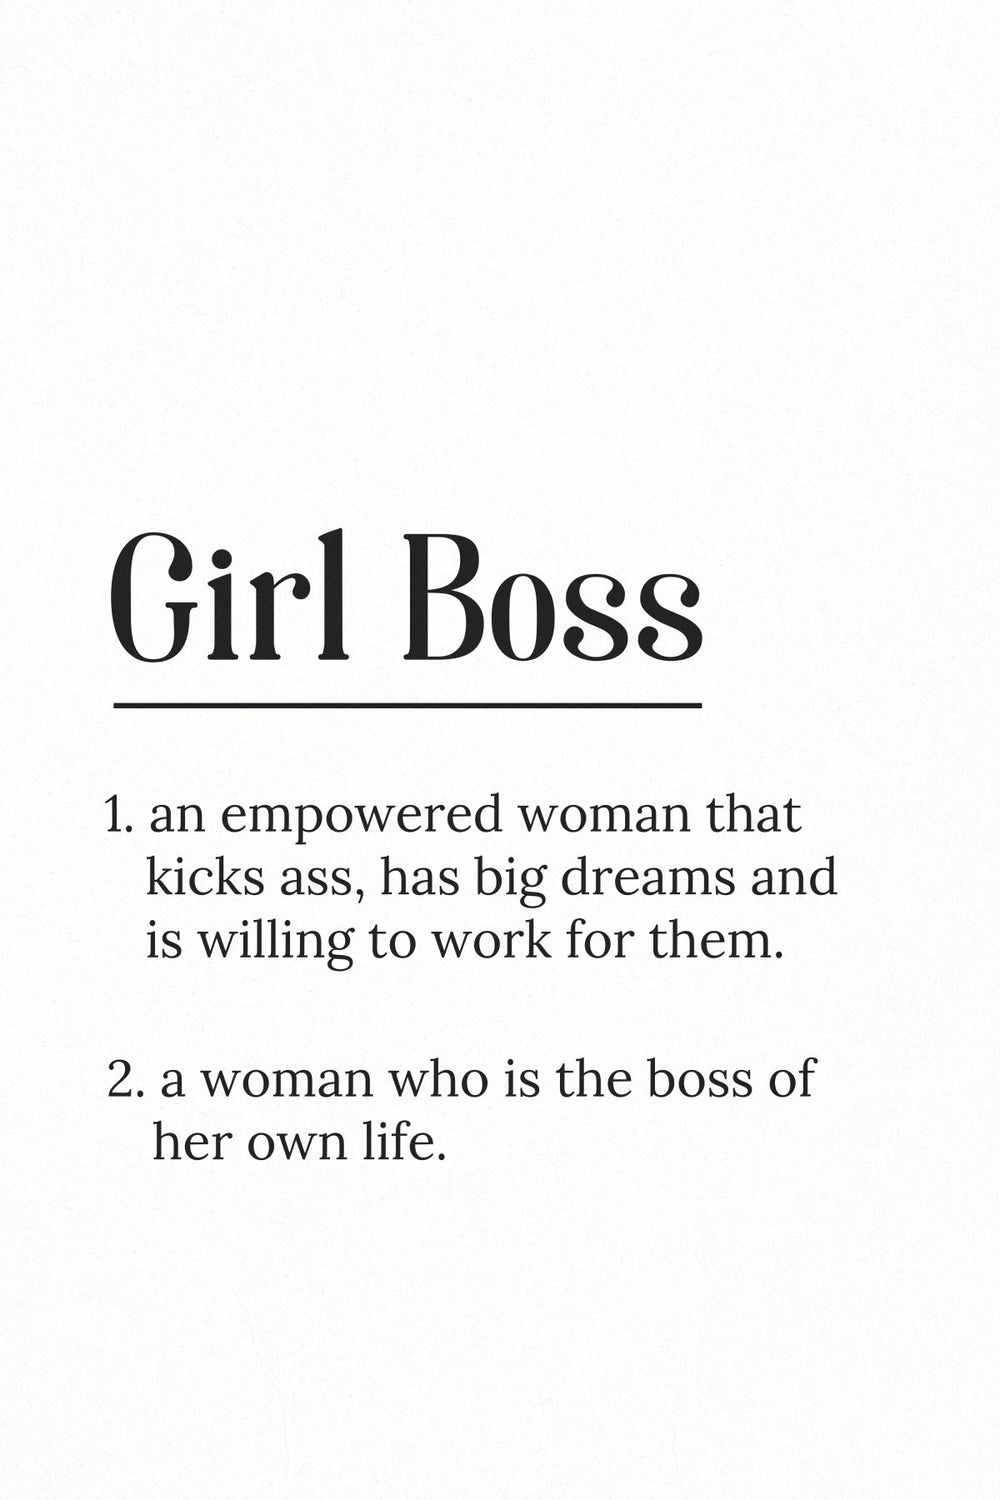 Girl Boss Definition II